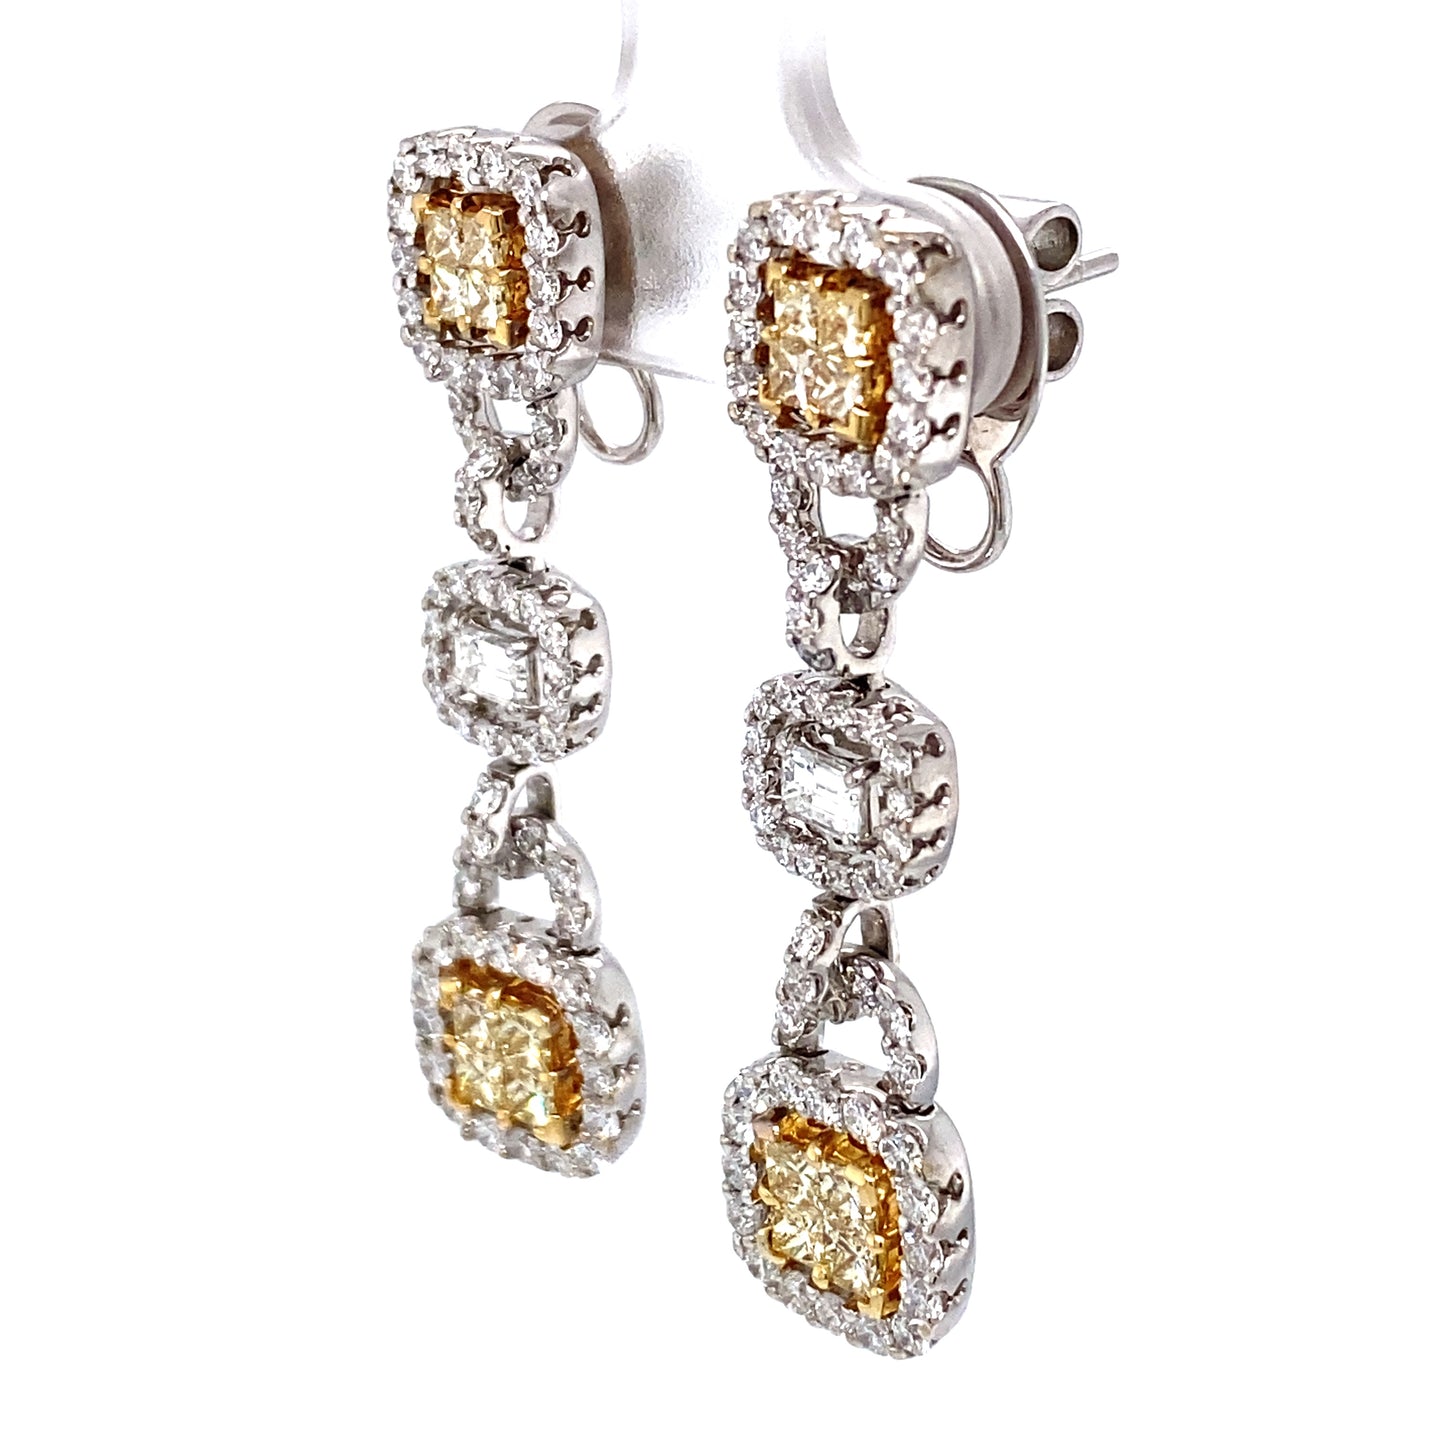 Circa 1980s White and Yellow Diamond Dangle Earrings in 18K White Gold